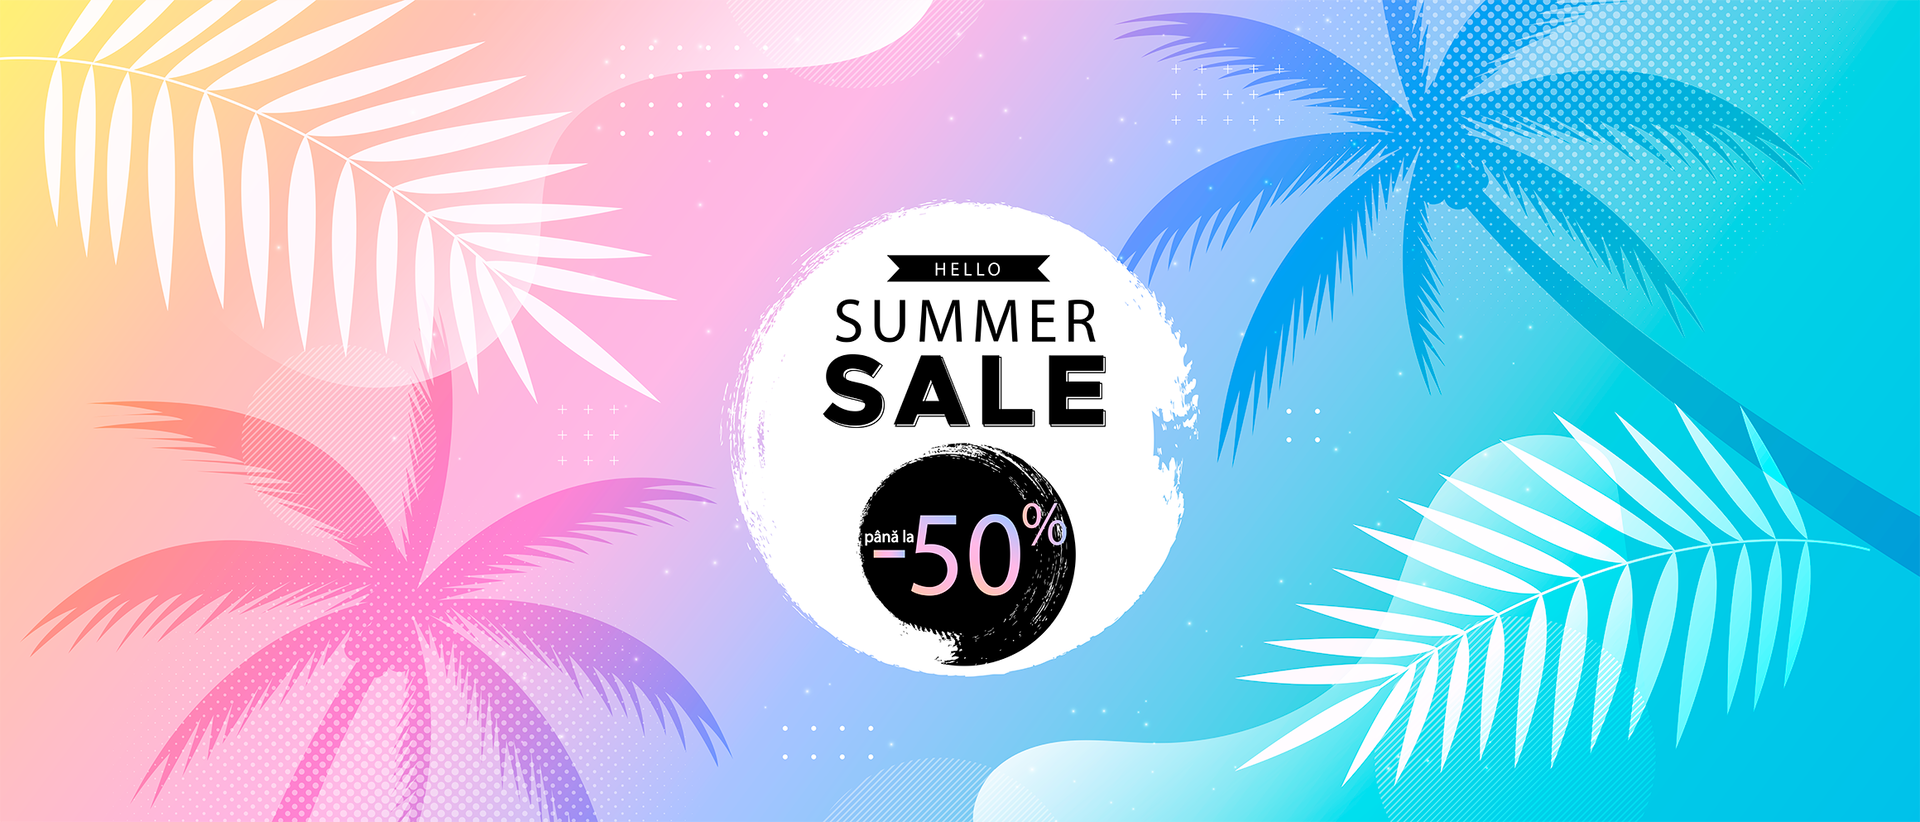 Summer sale ro